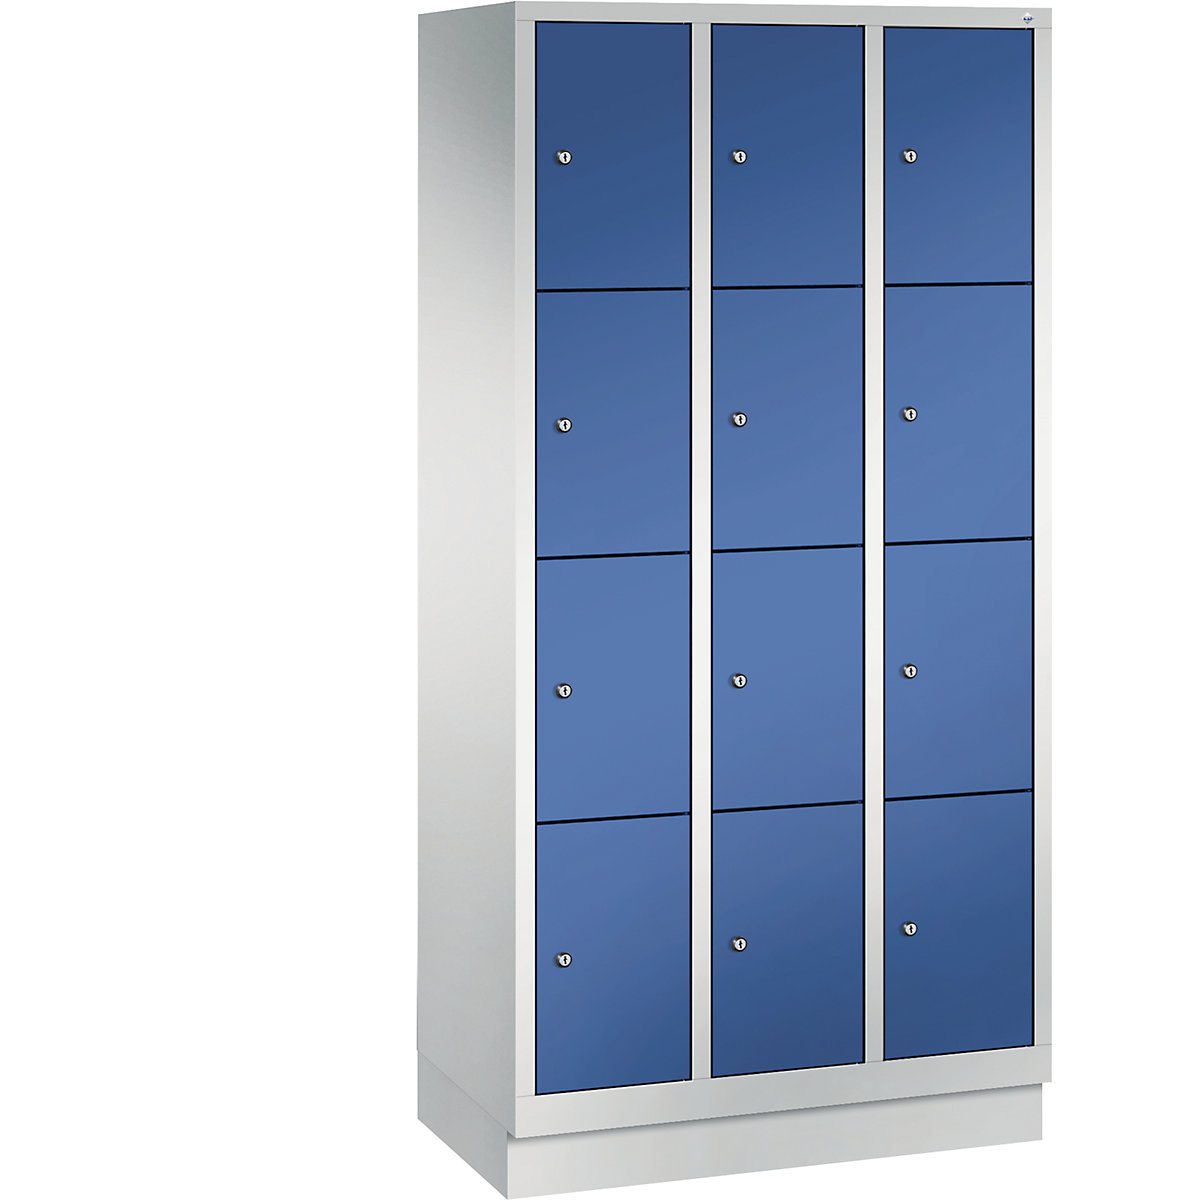 CLASSIC locker unit with plinth – C+P, 3 compartments, 4 shelf compartments each, compartment width 300 mm, light grey / gentian blue-5